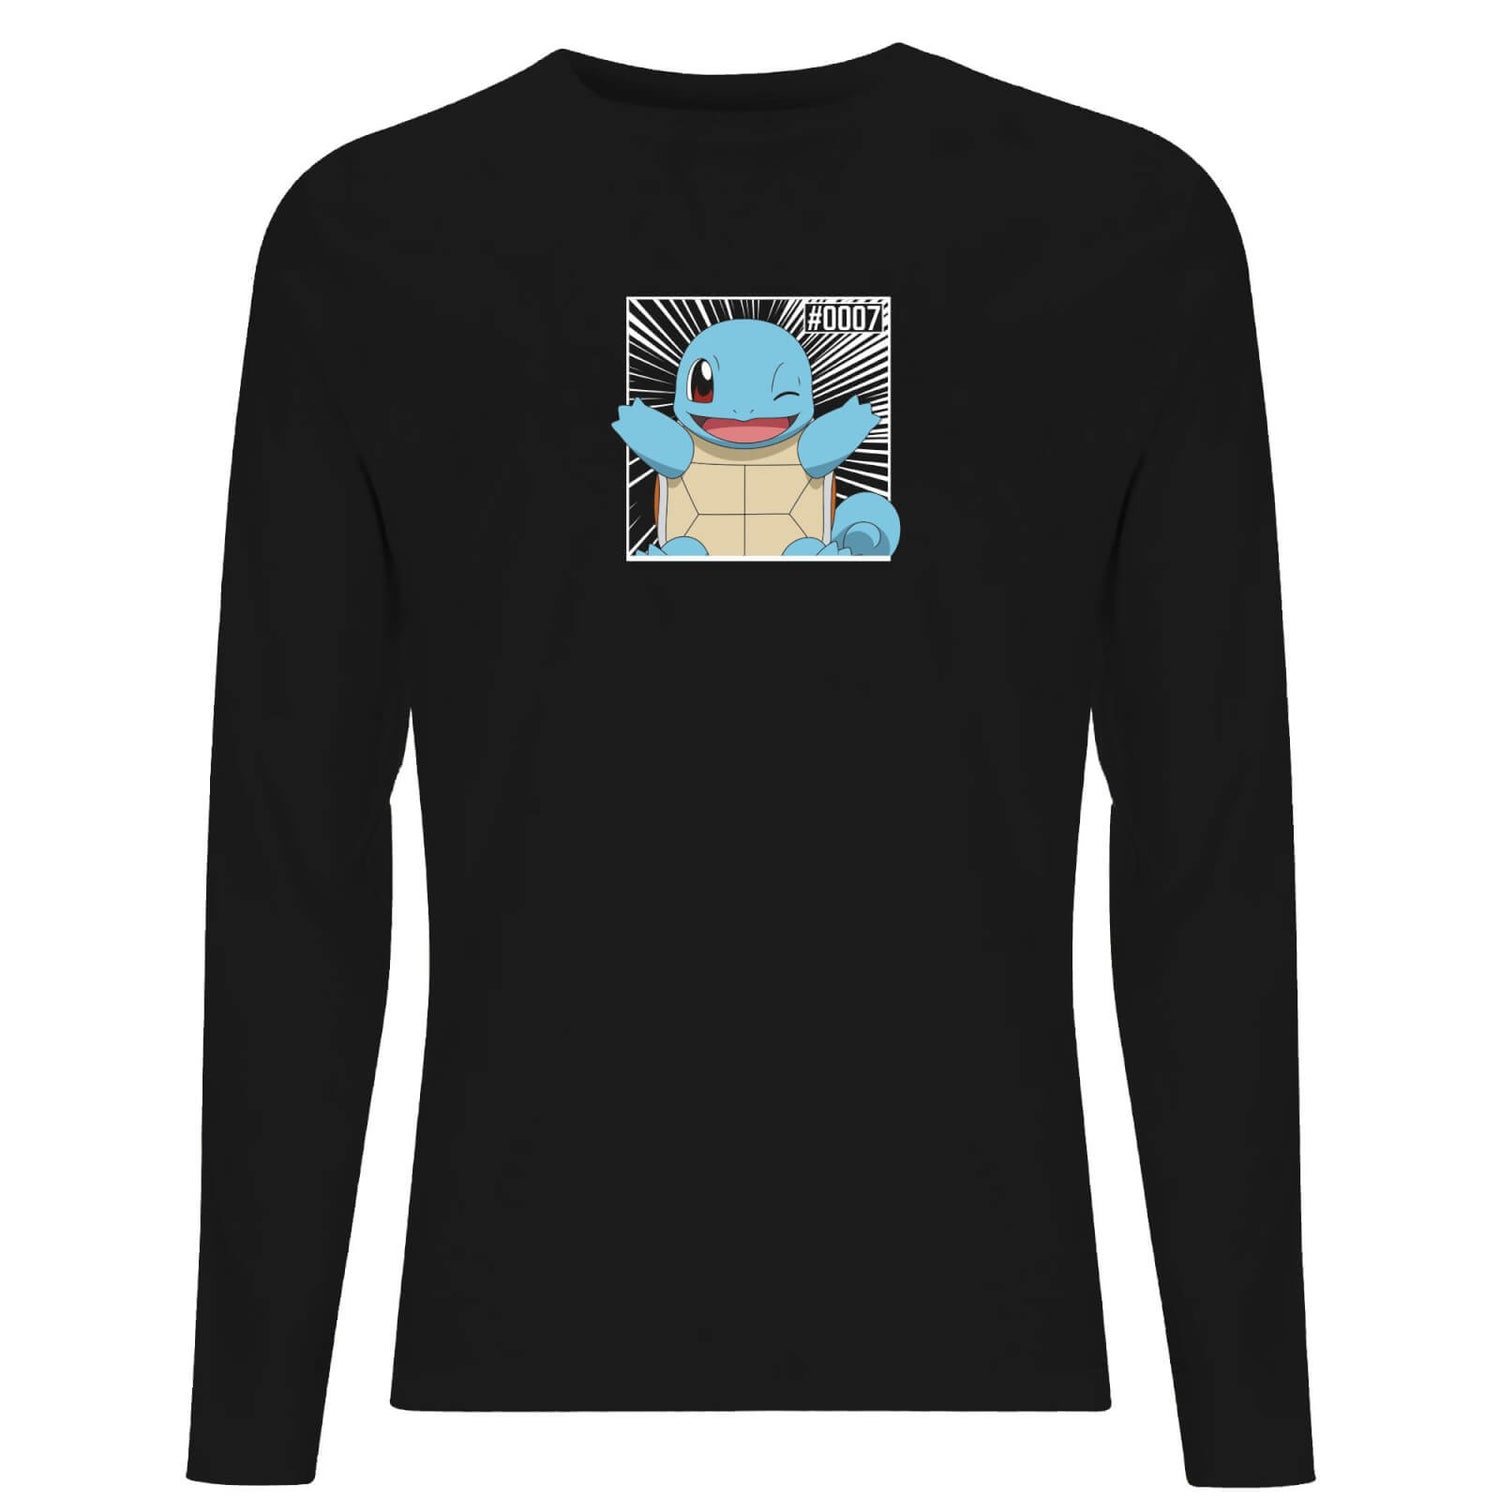 Pokémon Pokédex Squirtle #0007 Men's Long Sleeve T-Shirt - Black